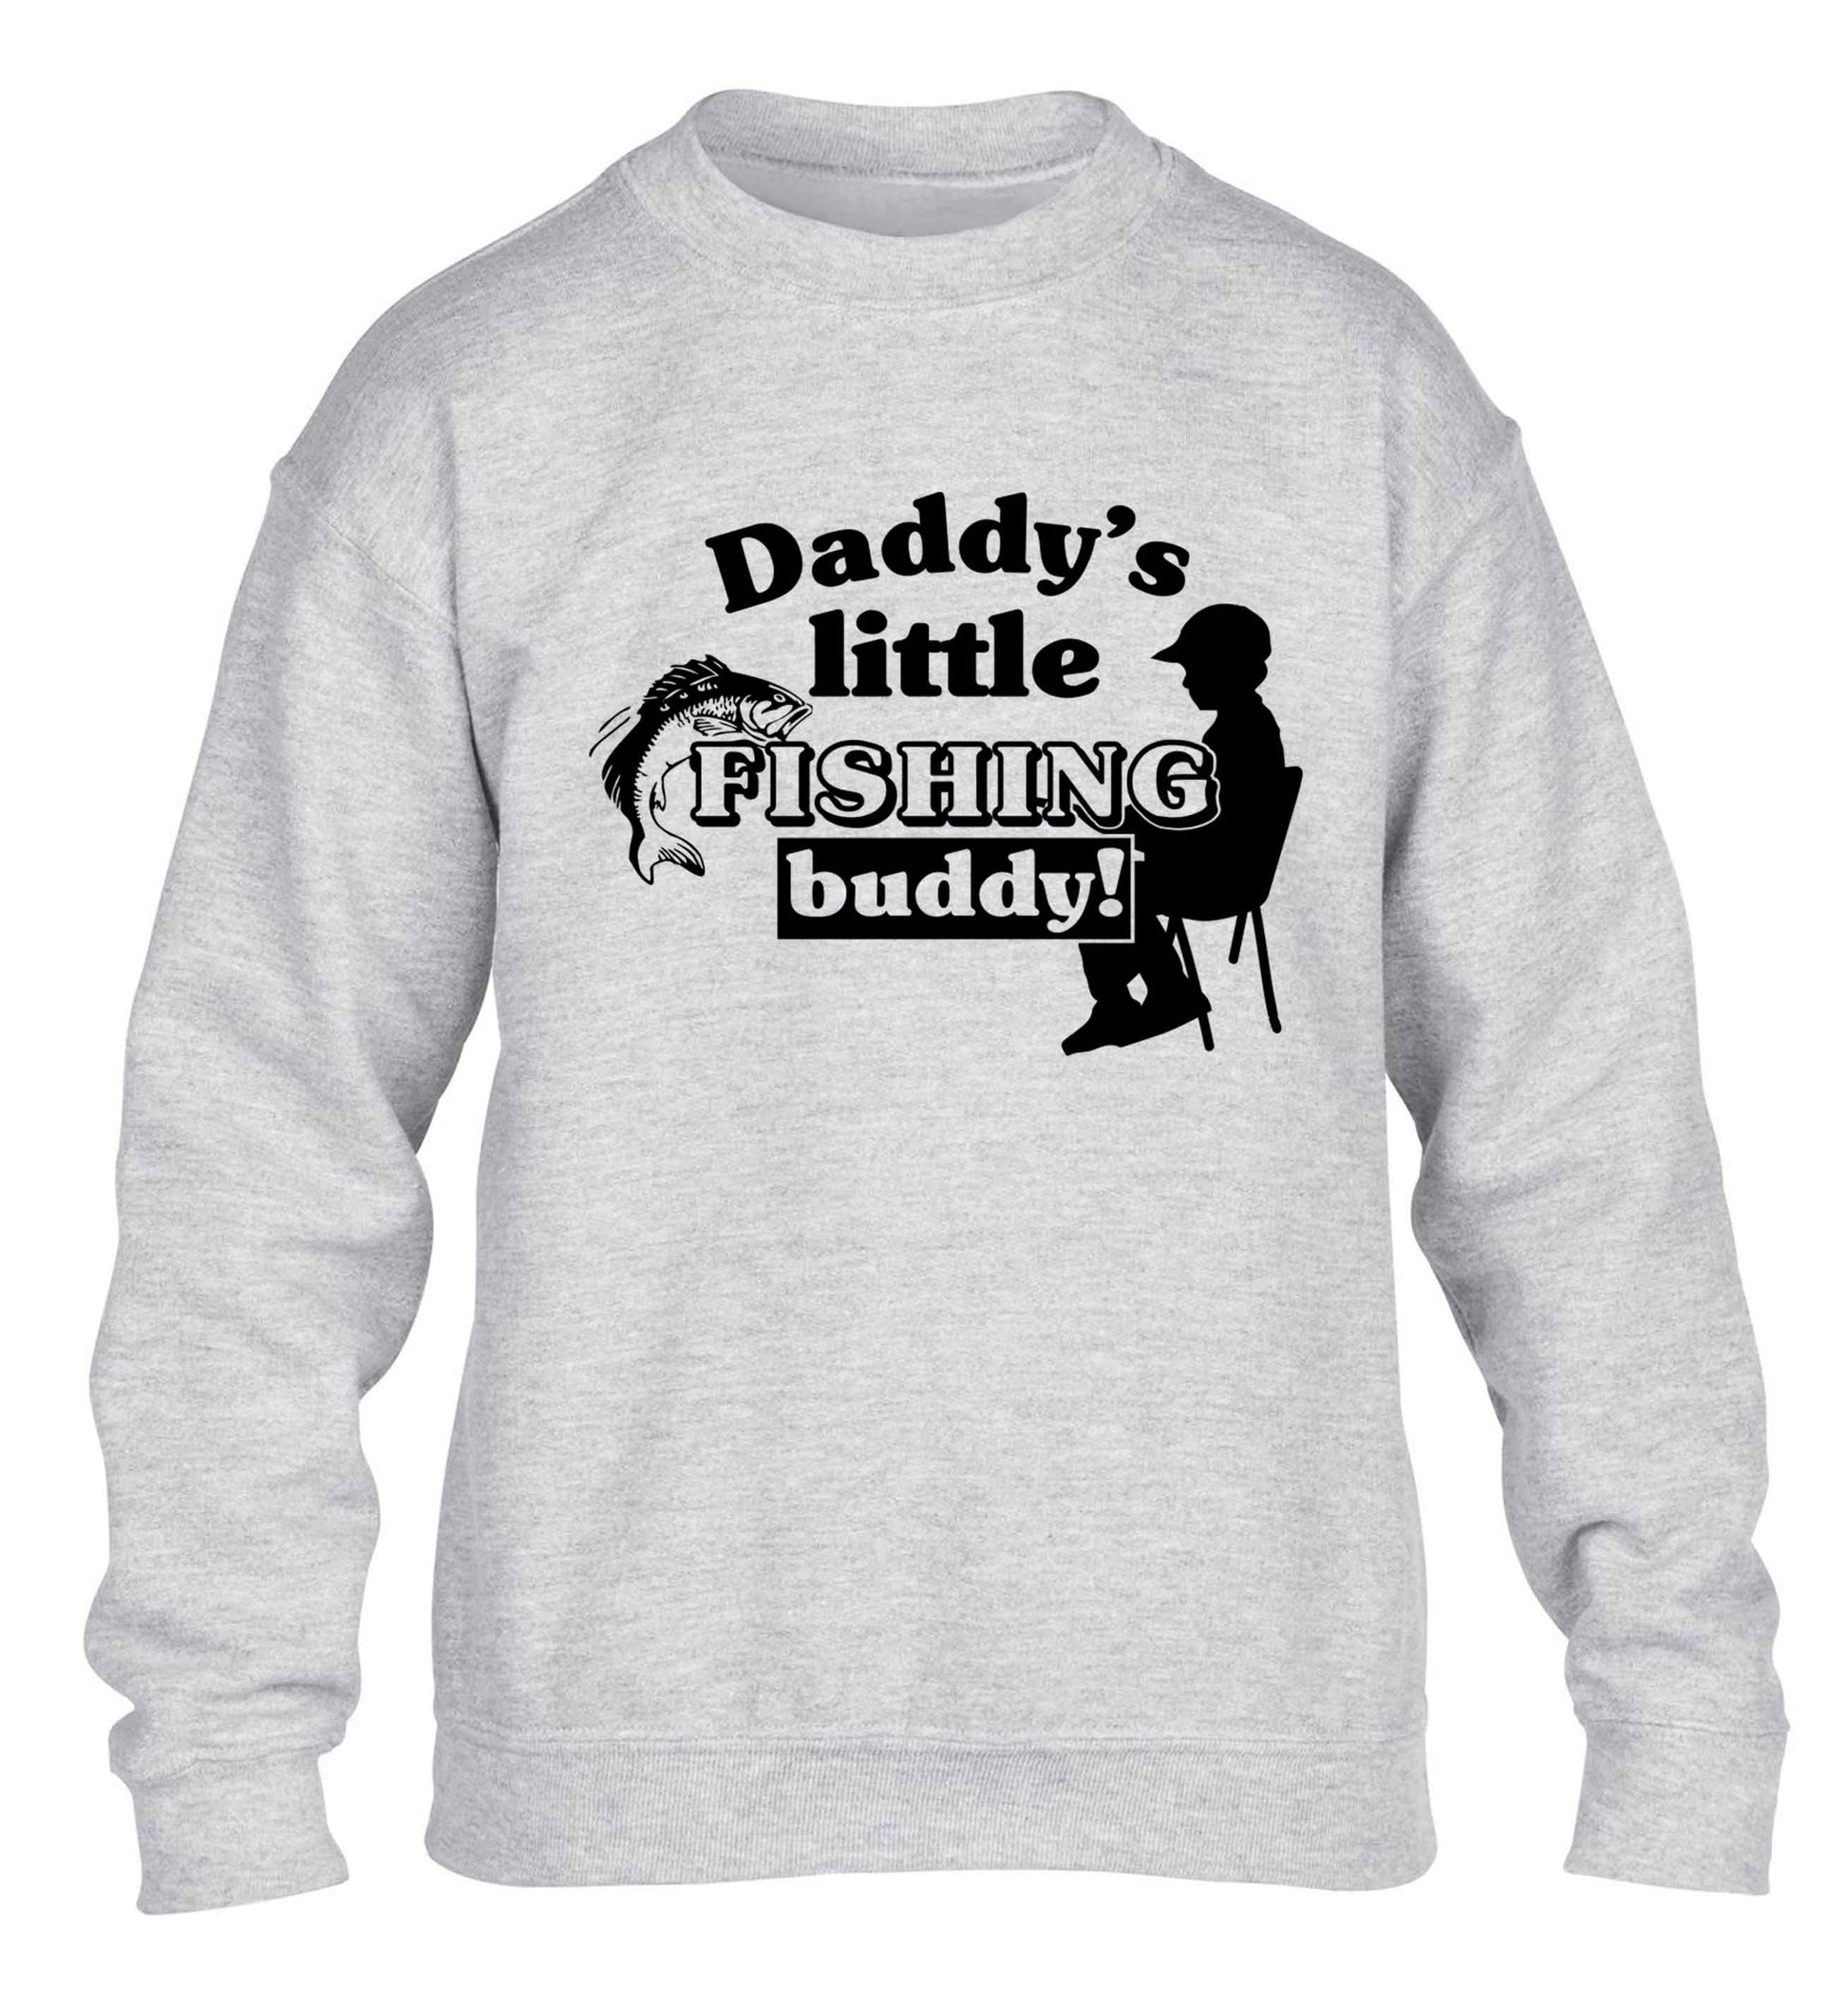 Daddy's little fishing buddy children's grey sweater 12-13 Years